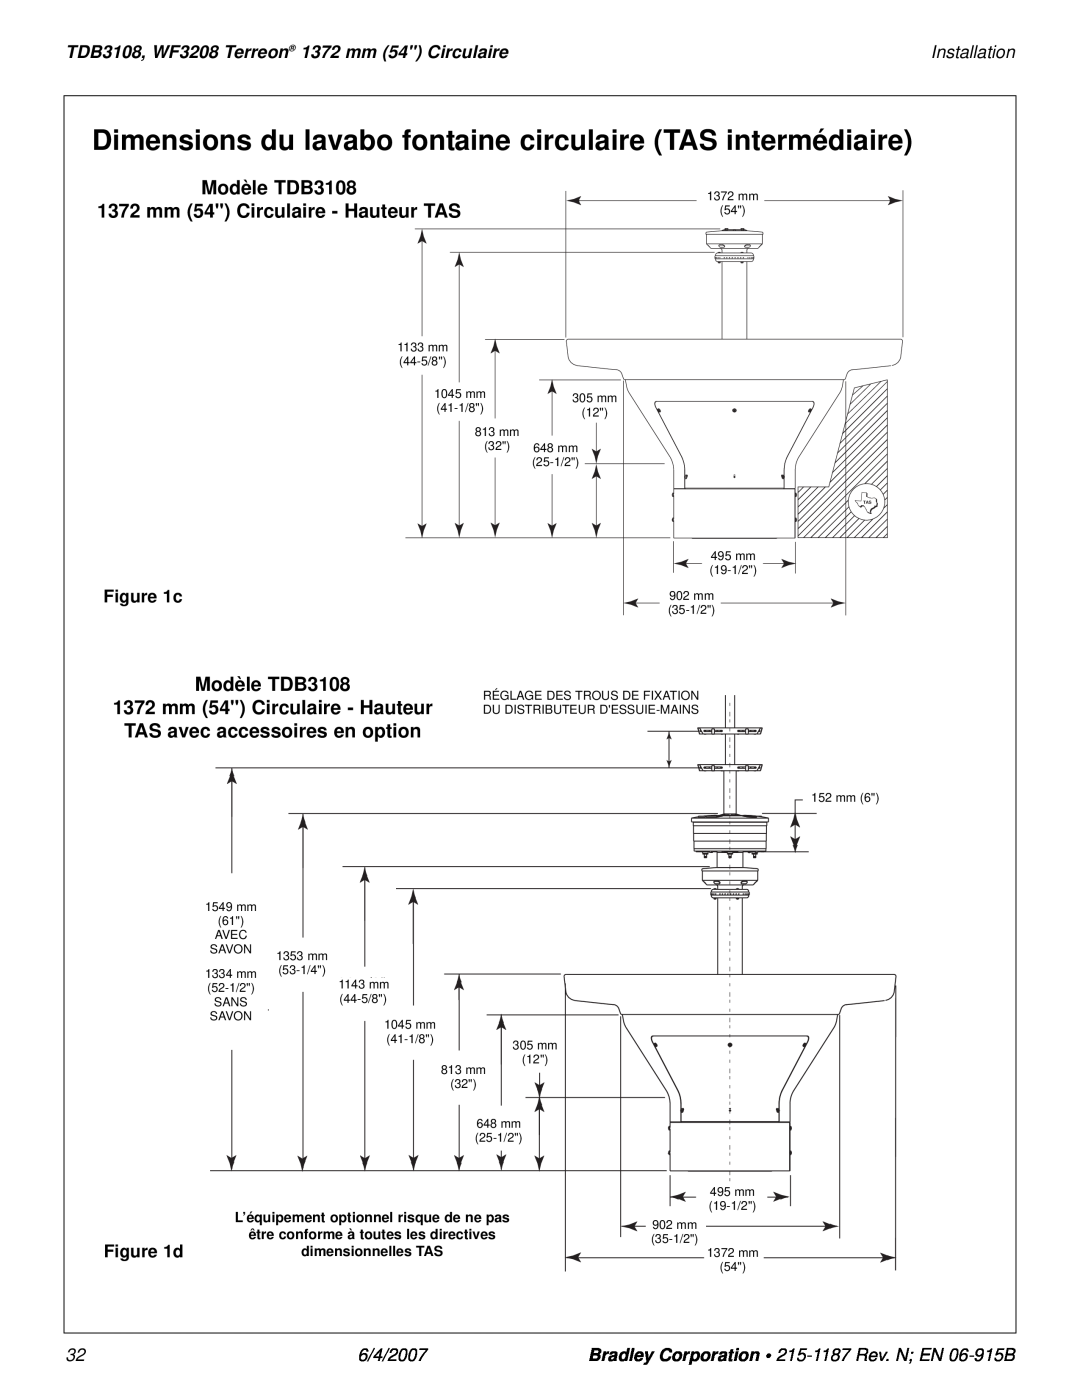 Bradley Smoker Dimensions du lavabo fontaine circulaire TAS intermédiaire, Modèle TDB3108, Installation, 6/4/2007 